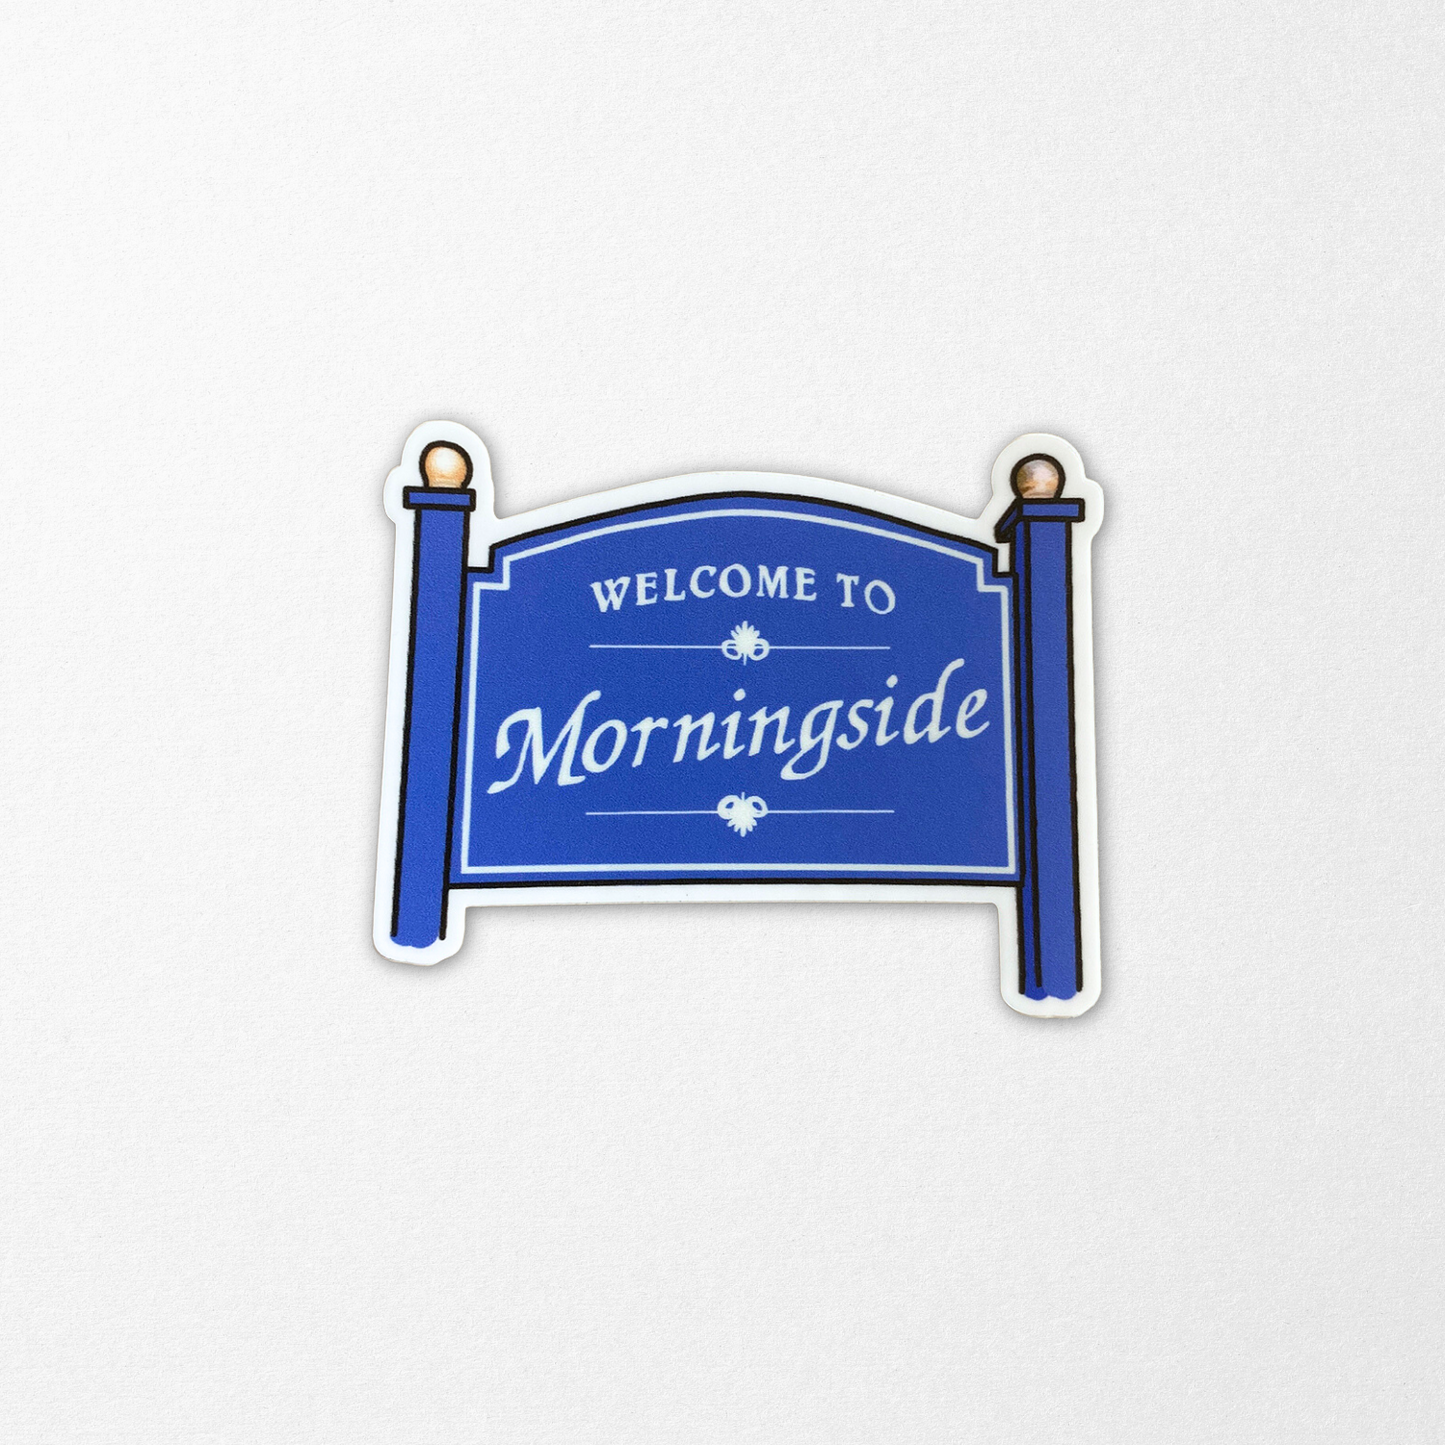 Morningside Neighborhood Sign